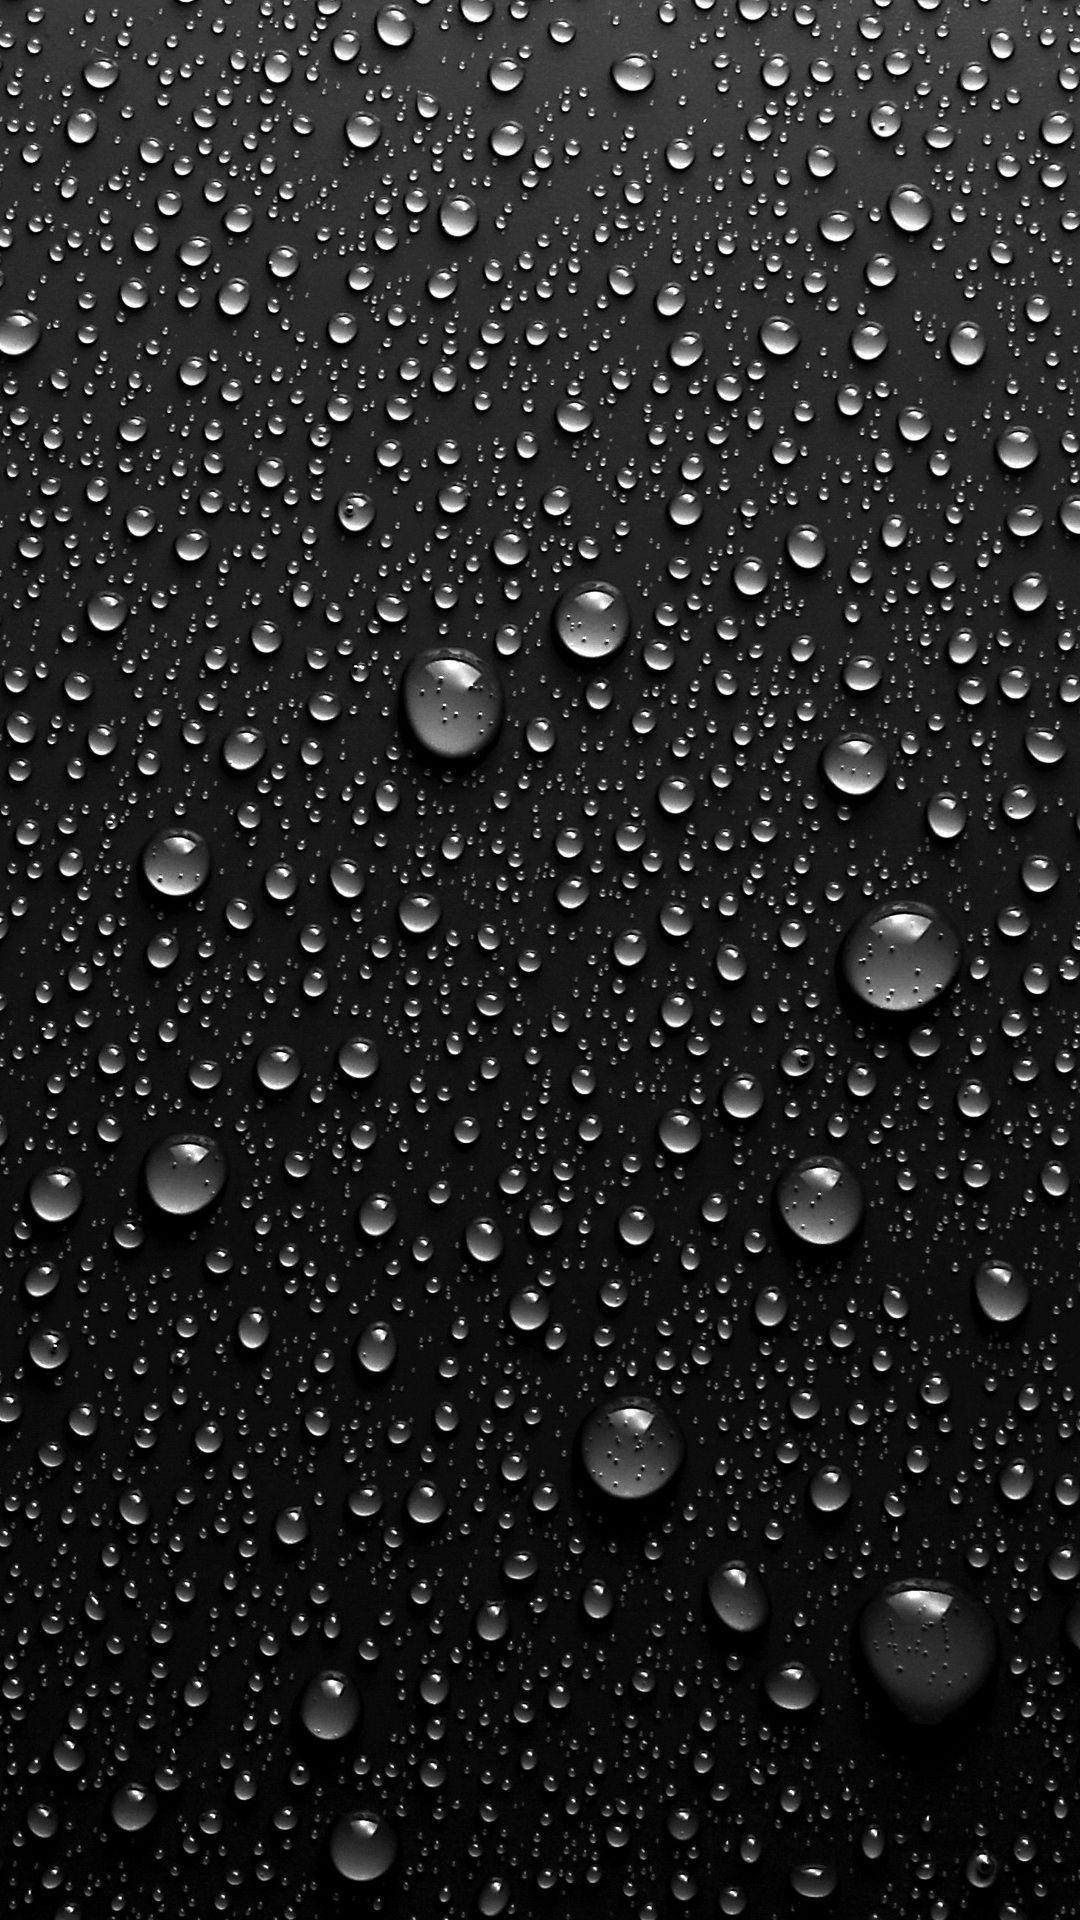 raindrops background images